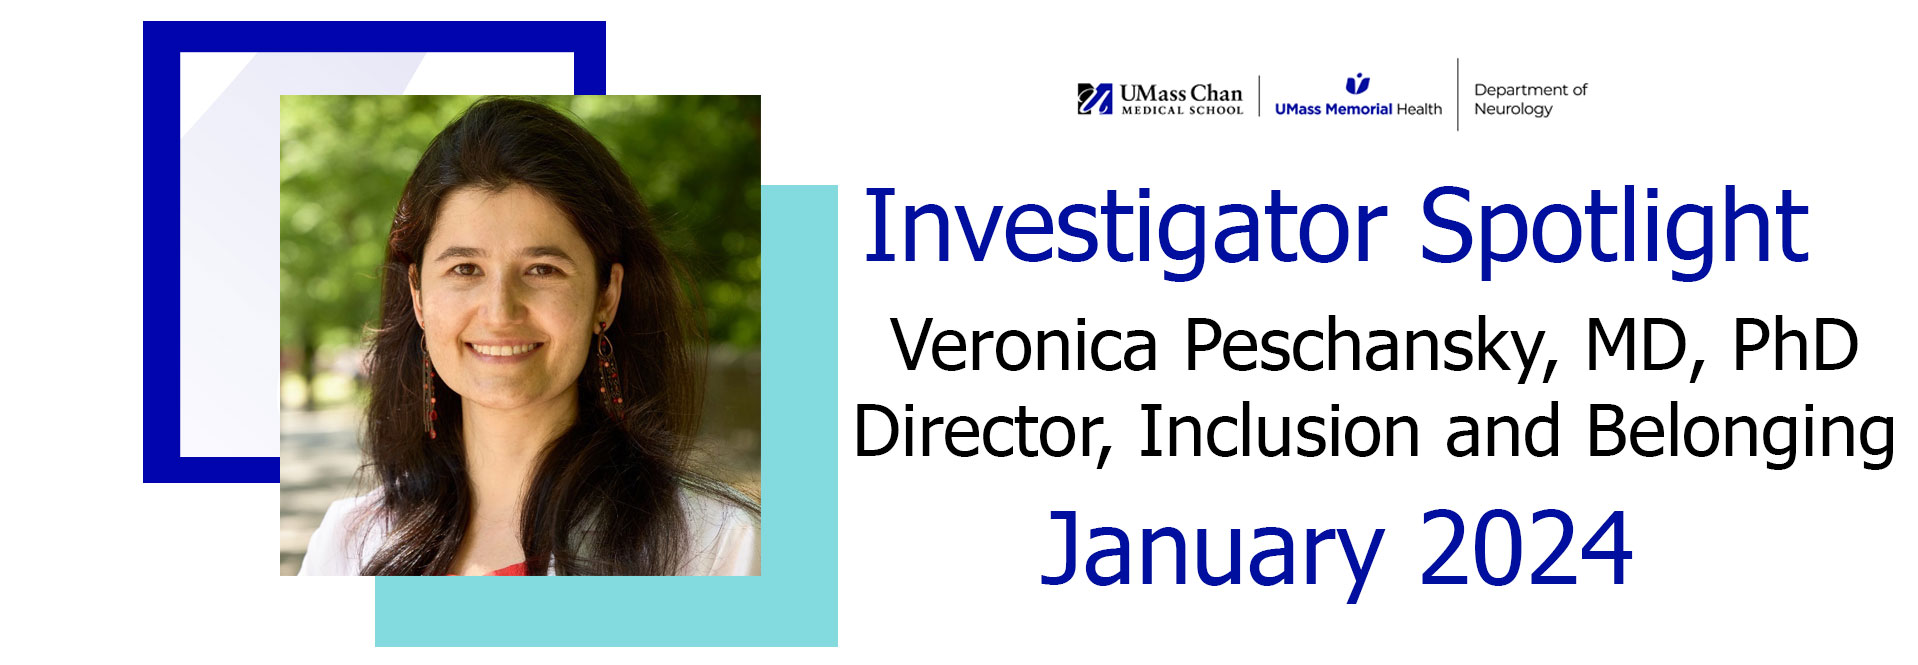 Veronica Peschansky, MD, PhD, Investigator Spotlight, Director of Inclusion and Belonging for Neurology, January 2024